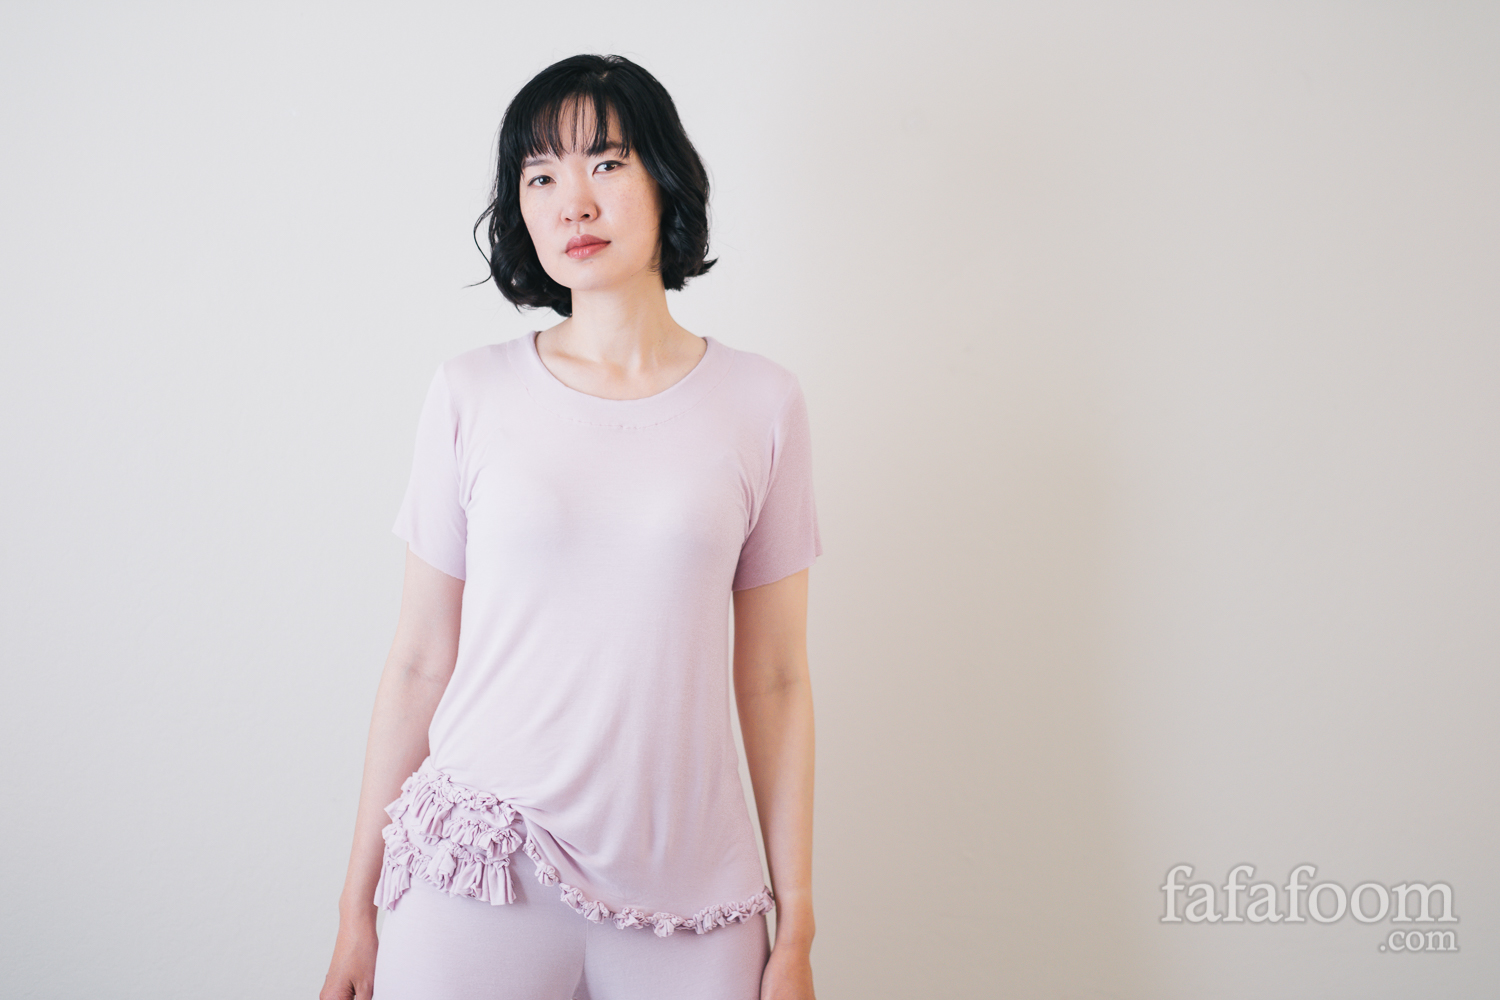 DIY Pink Ruffled Sleepwear Top and Shorts - DIY Fashion Garments | fafafoom.com